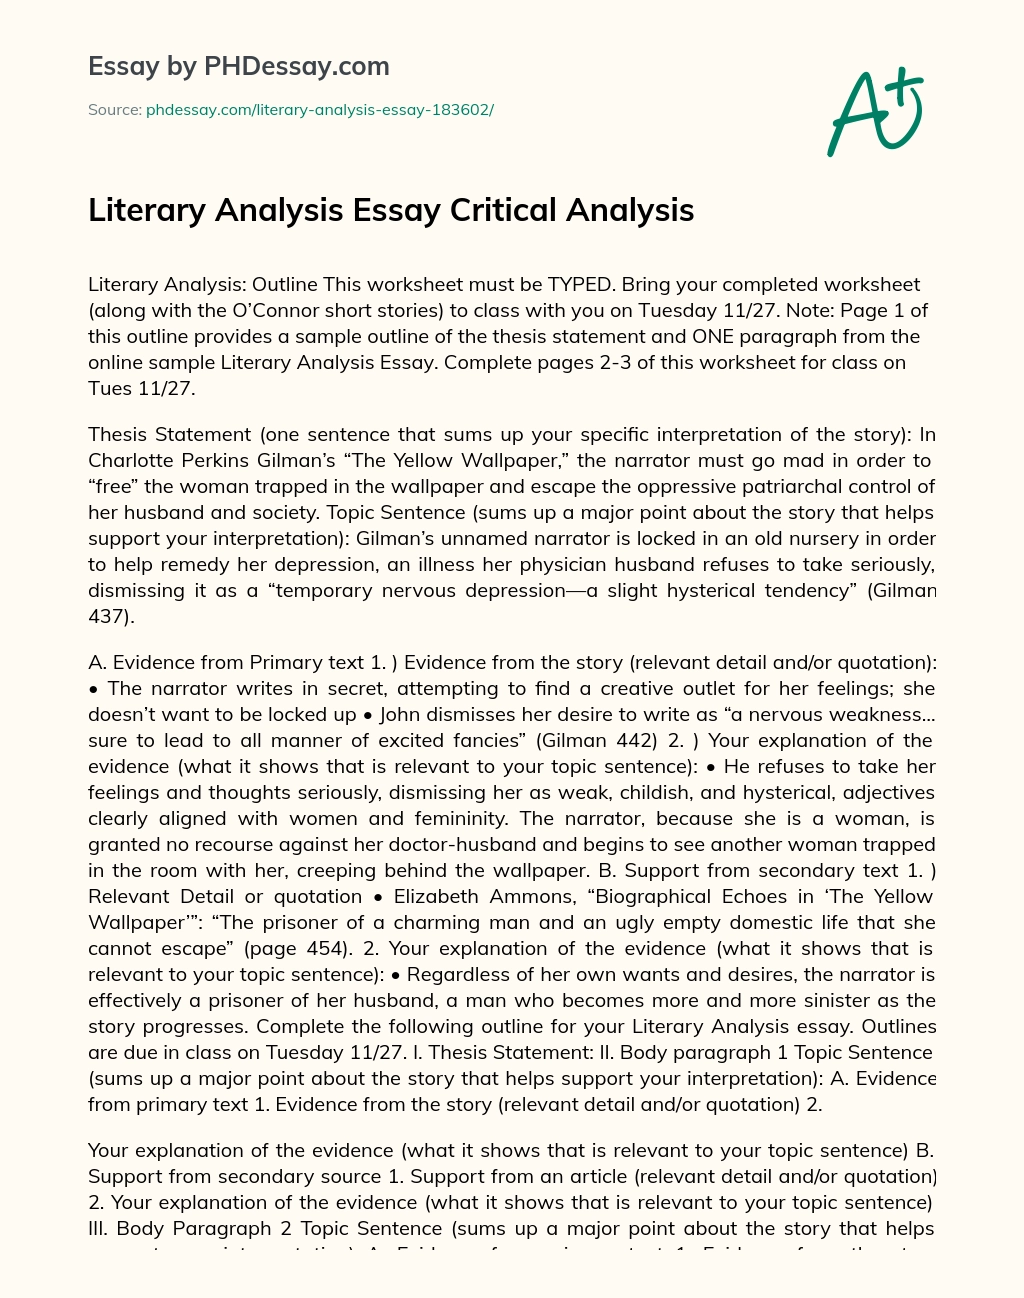 Literary Analysis Essay Critical Analysis